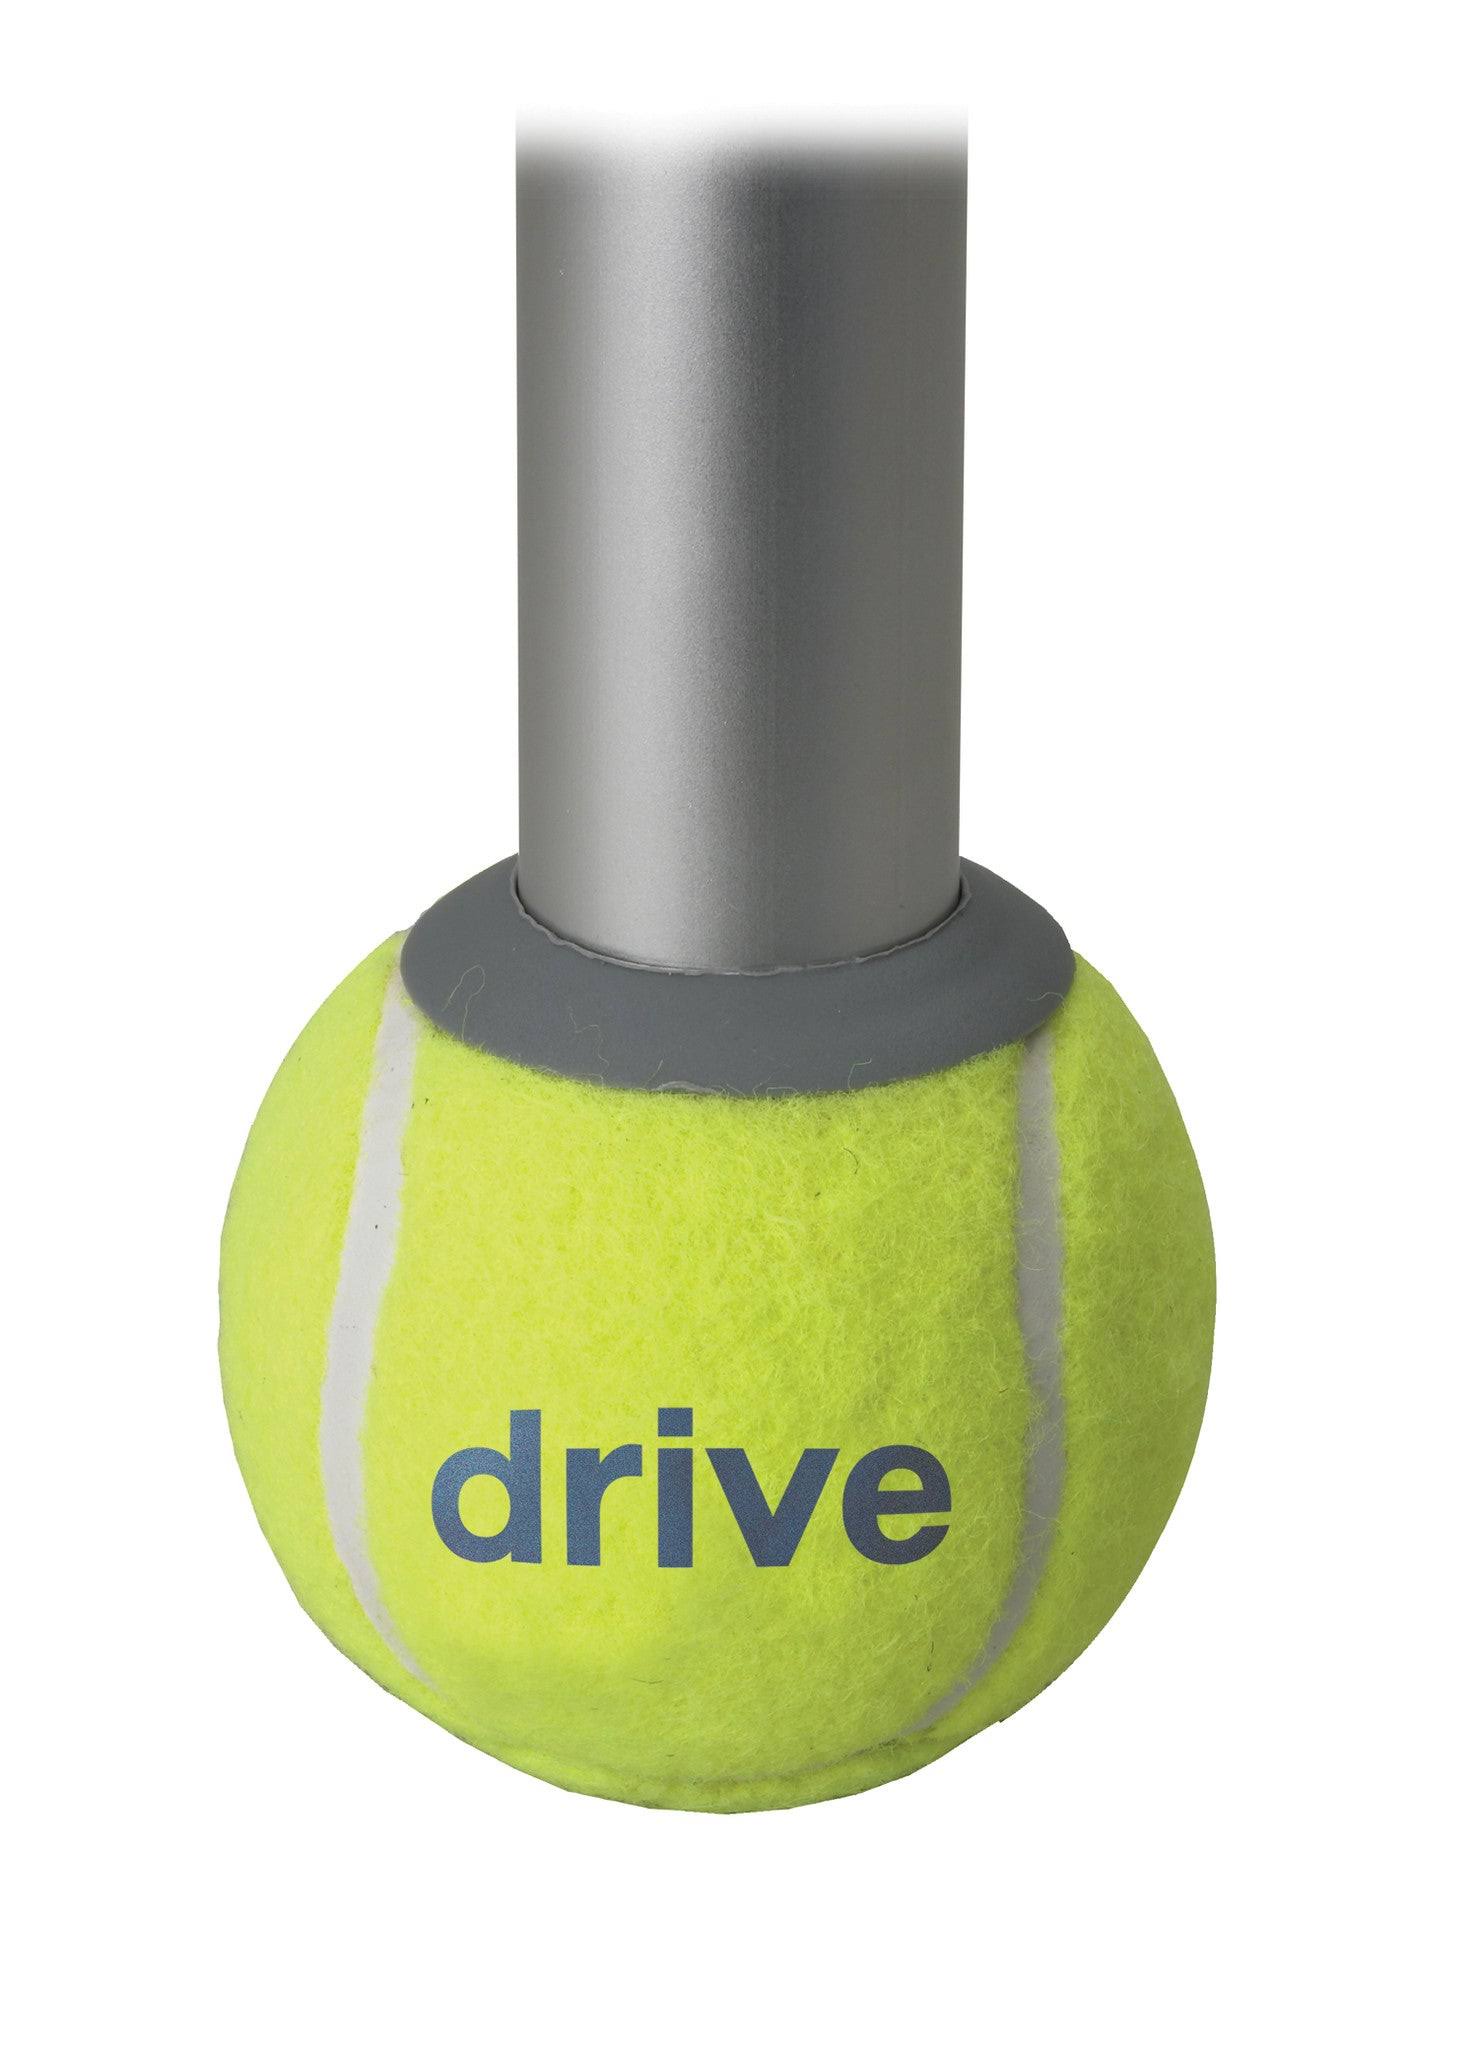 Drive Medical Deluxe Walker Rear Tennis Ball Glides - Yellow